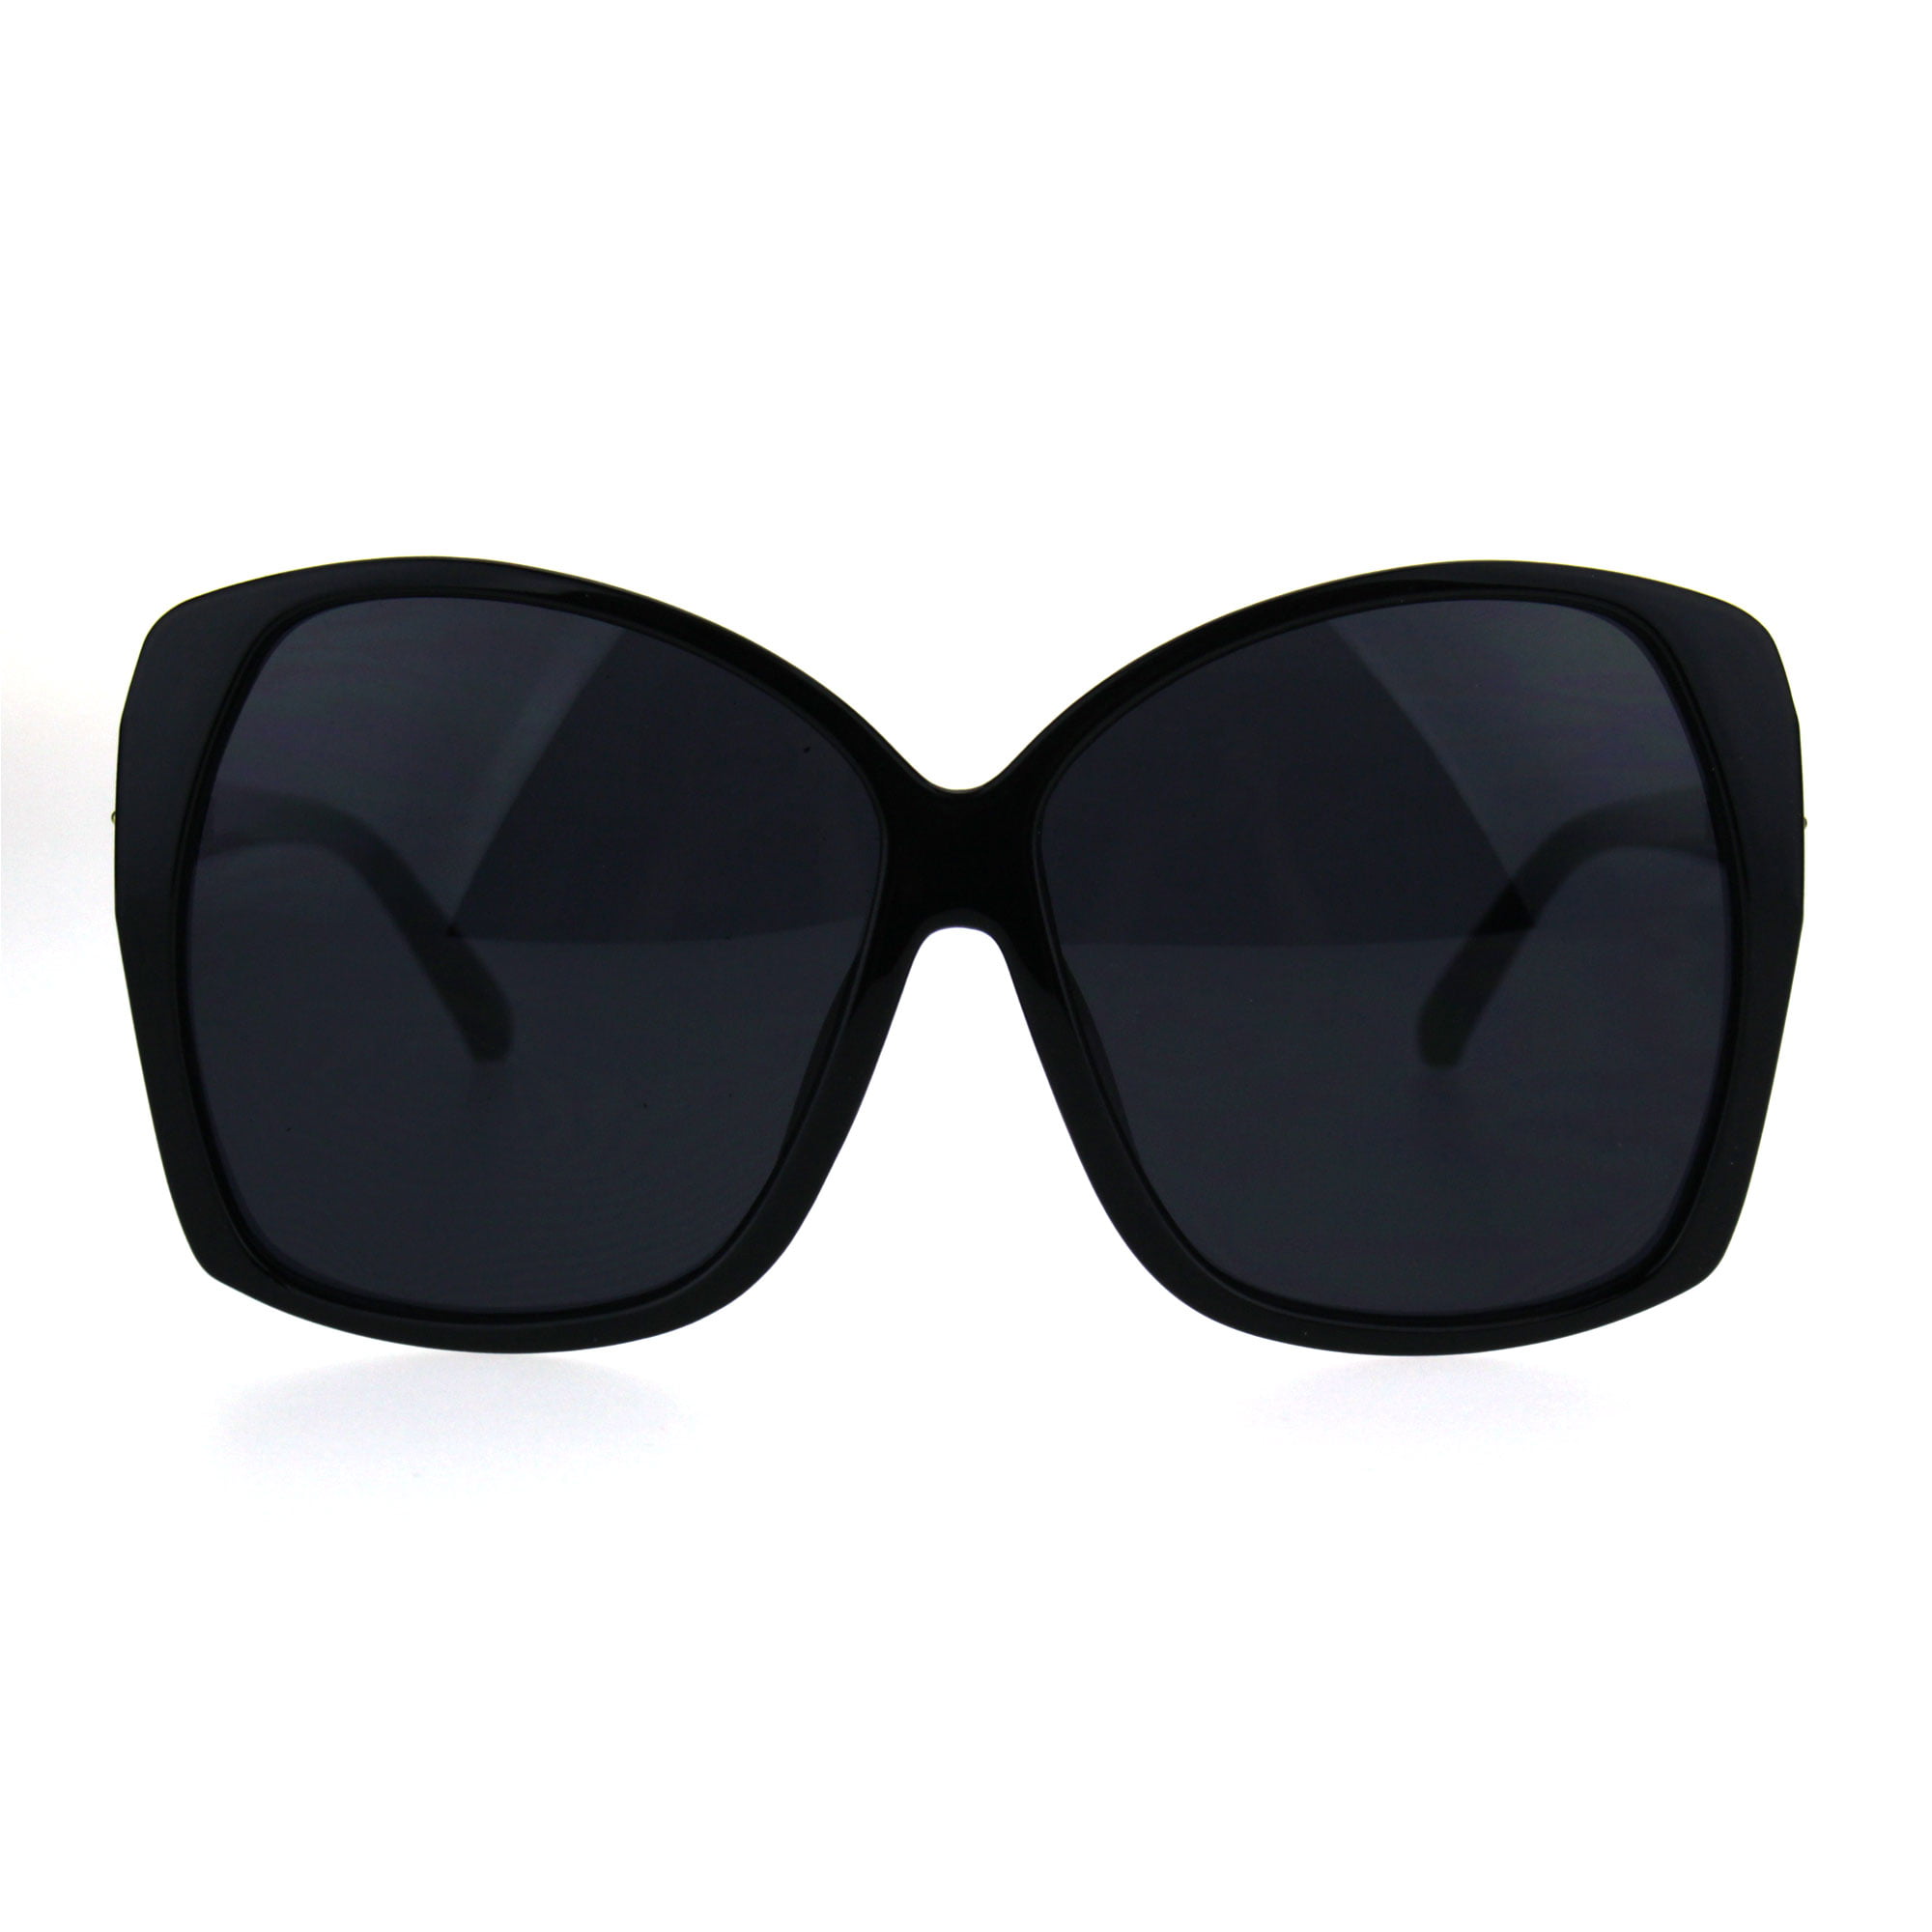 Designer Fashion Women's Sunglasses Oversize Butterfly Frame 